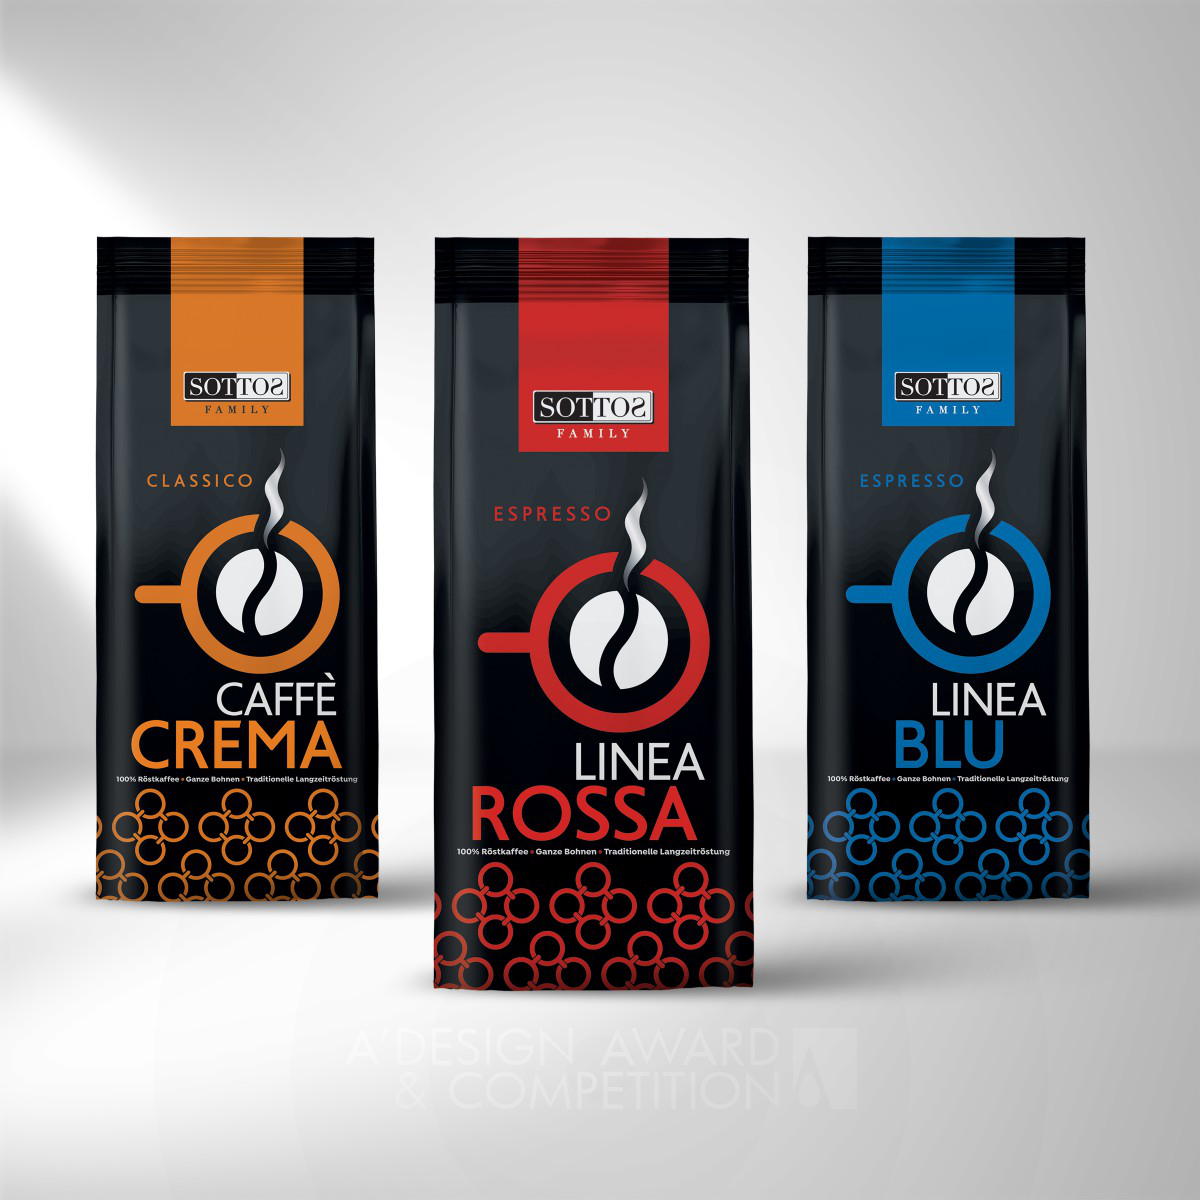 Andromachi Kakava wins Iron at the prestigious A' Packaging Design Award with Espresso  Coffee Branding.